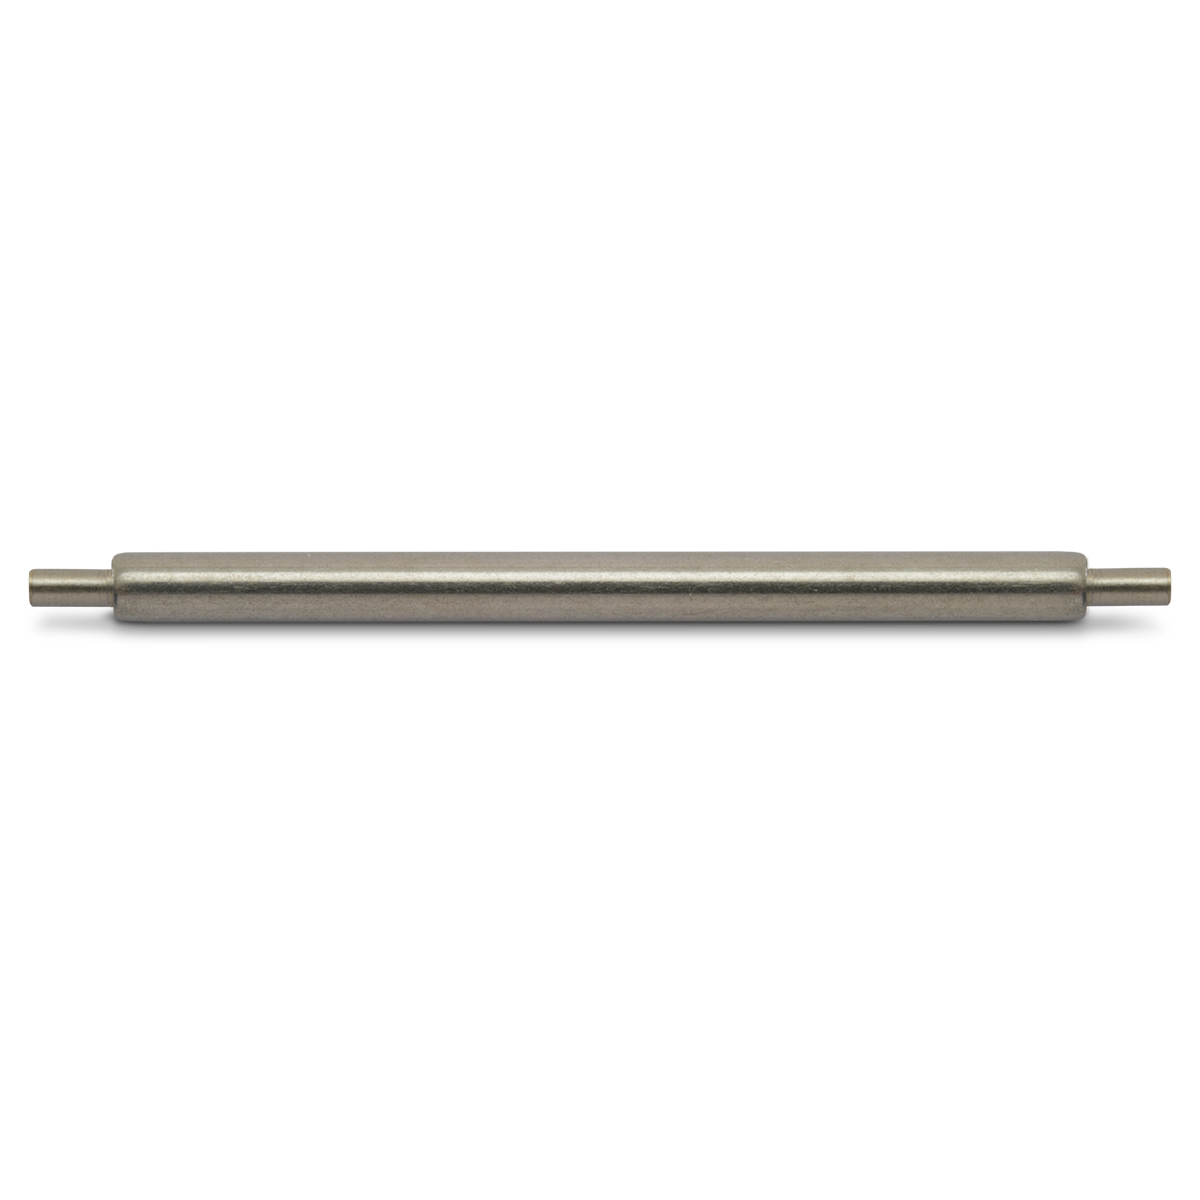 100 Barrettes en acier inox, sans ergots, tuyau Ø 1,0 mm, pivot Ø 0,6 mm, longueur 15 mm,  extra fin